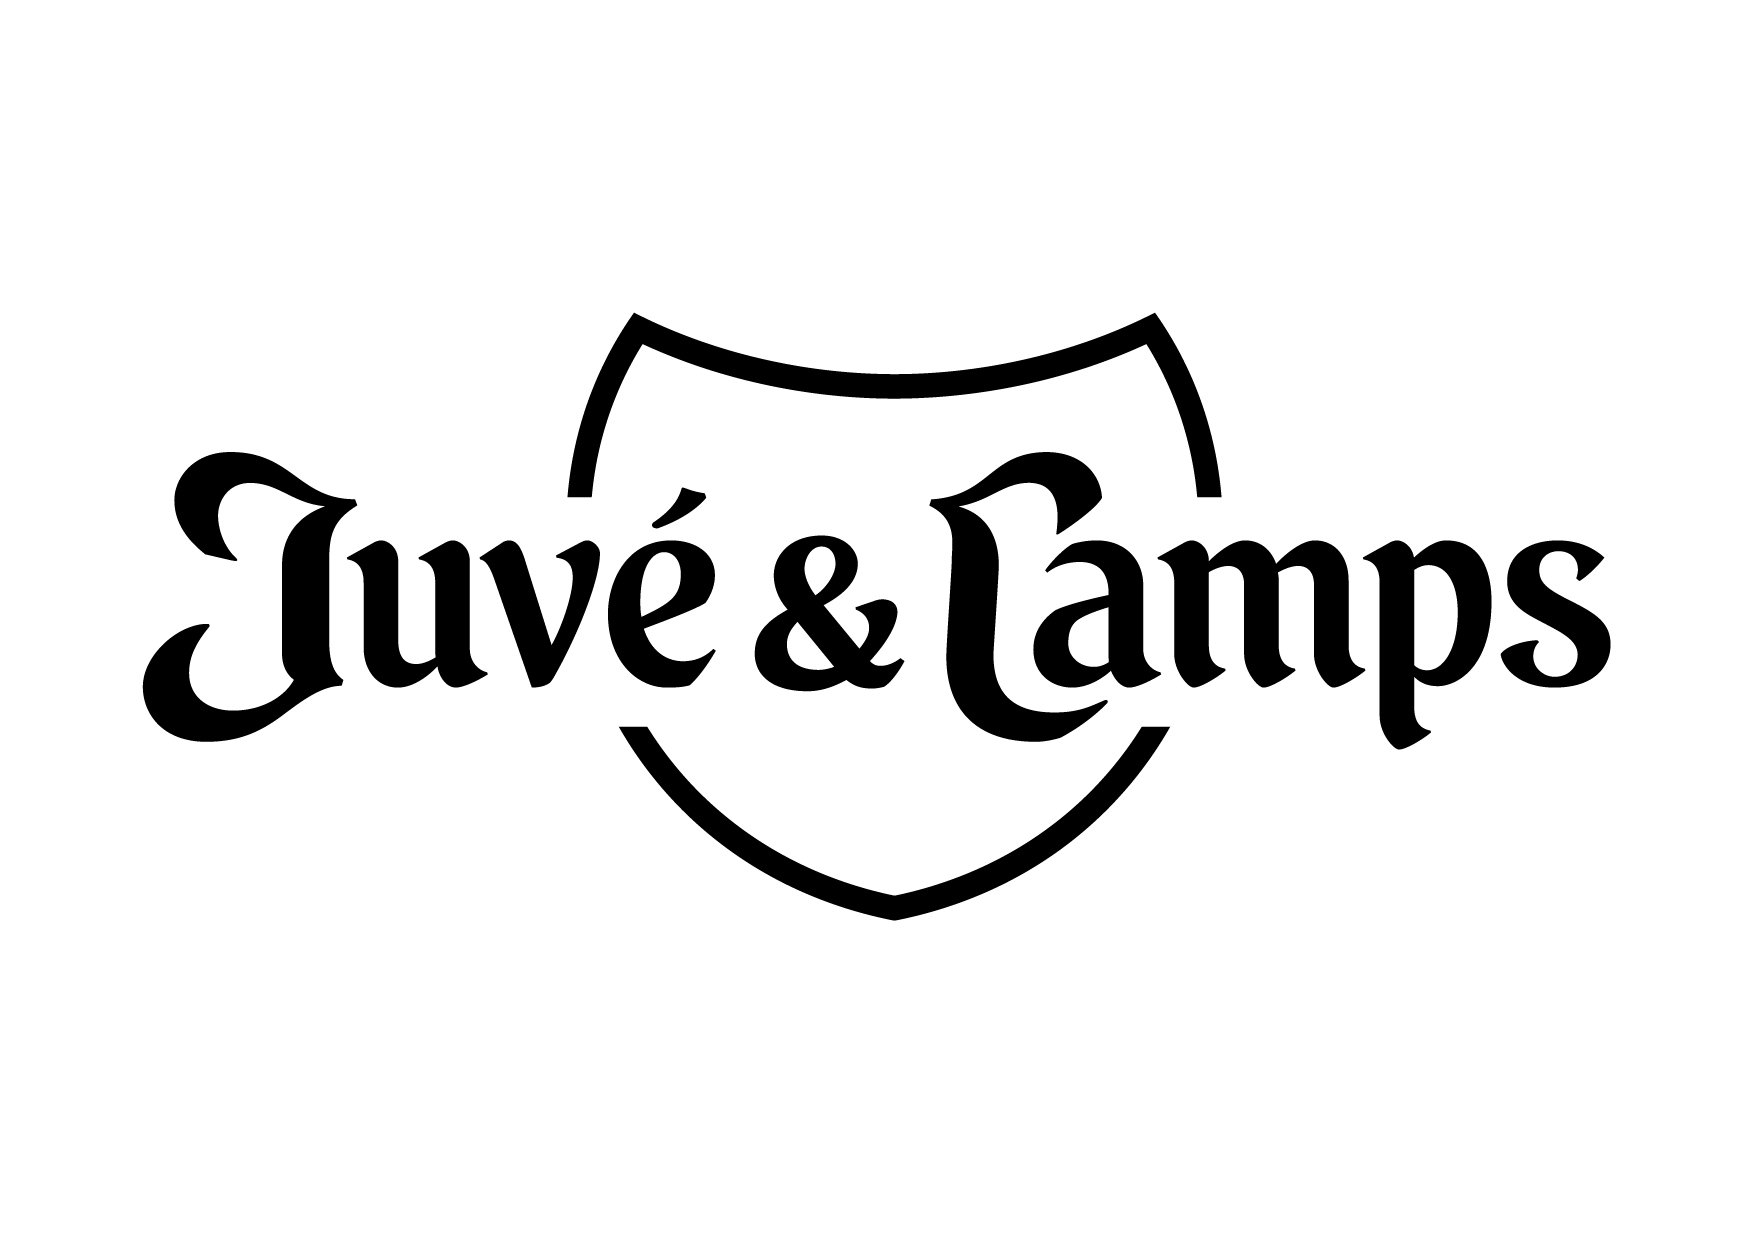 NEW ESCUT - Juve & Camps - Mod 2.jpg